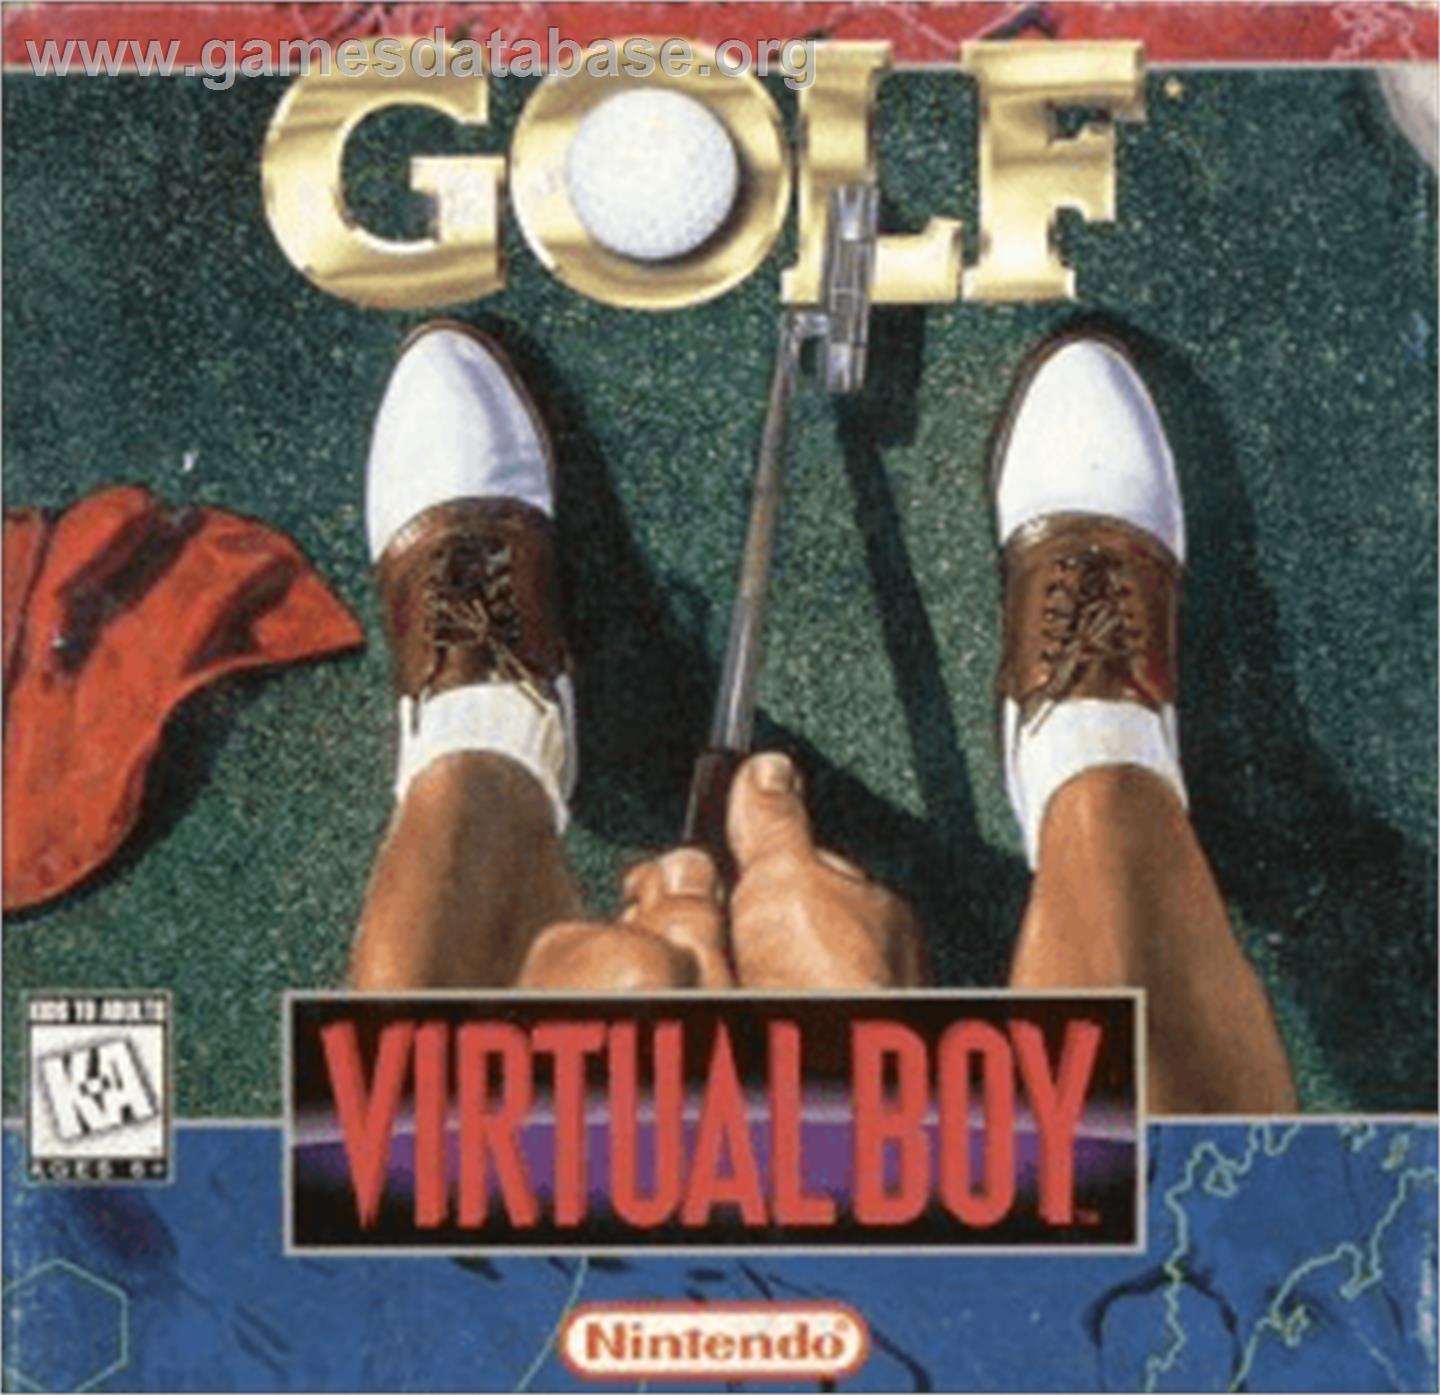 Golf - Nintendo Virtual Boy - Artwork - Box